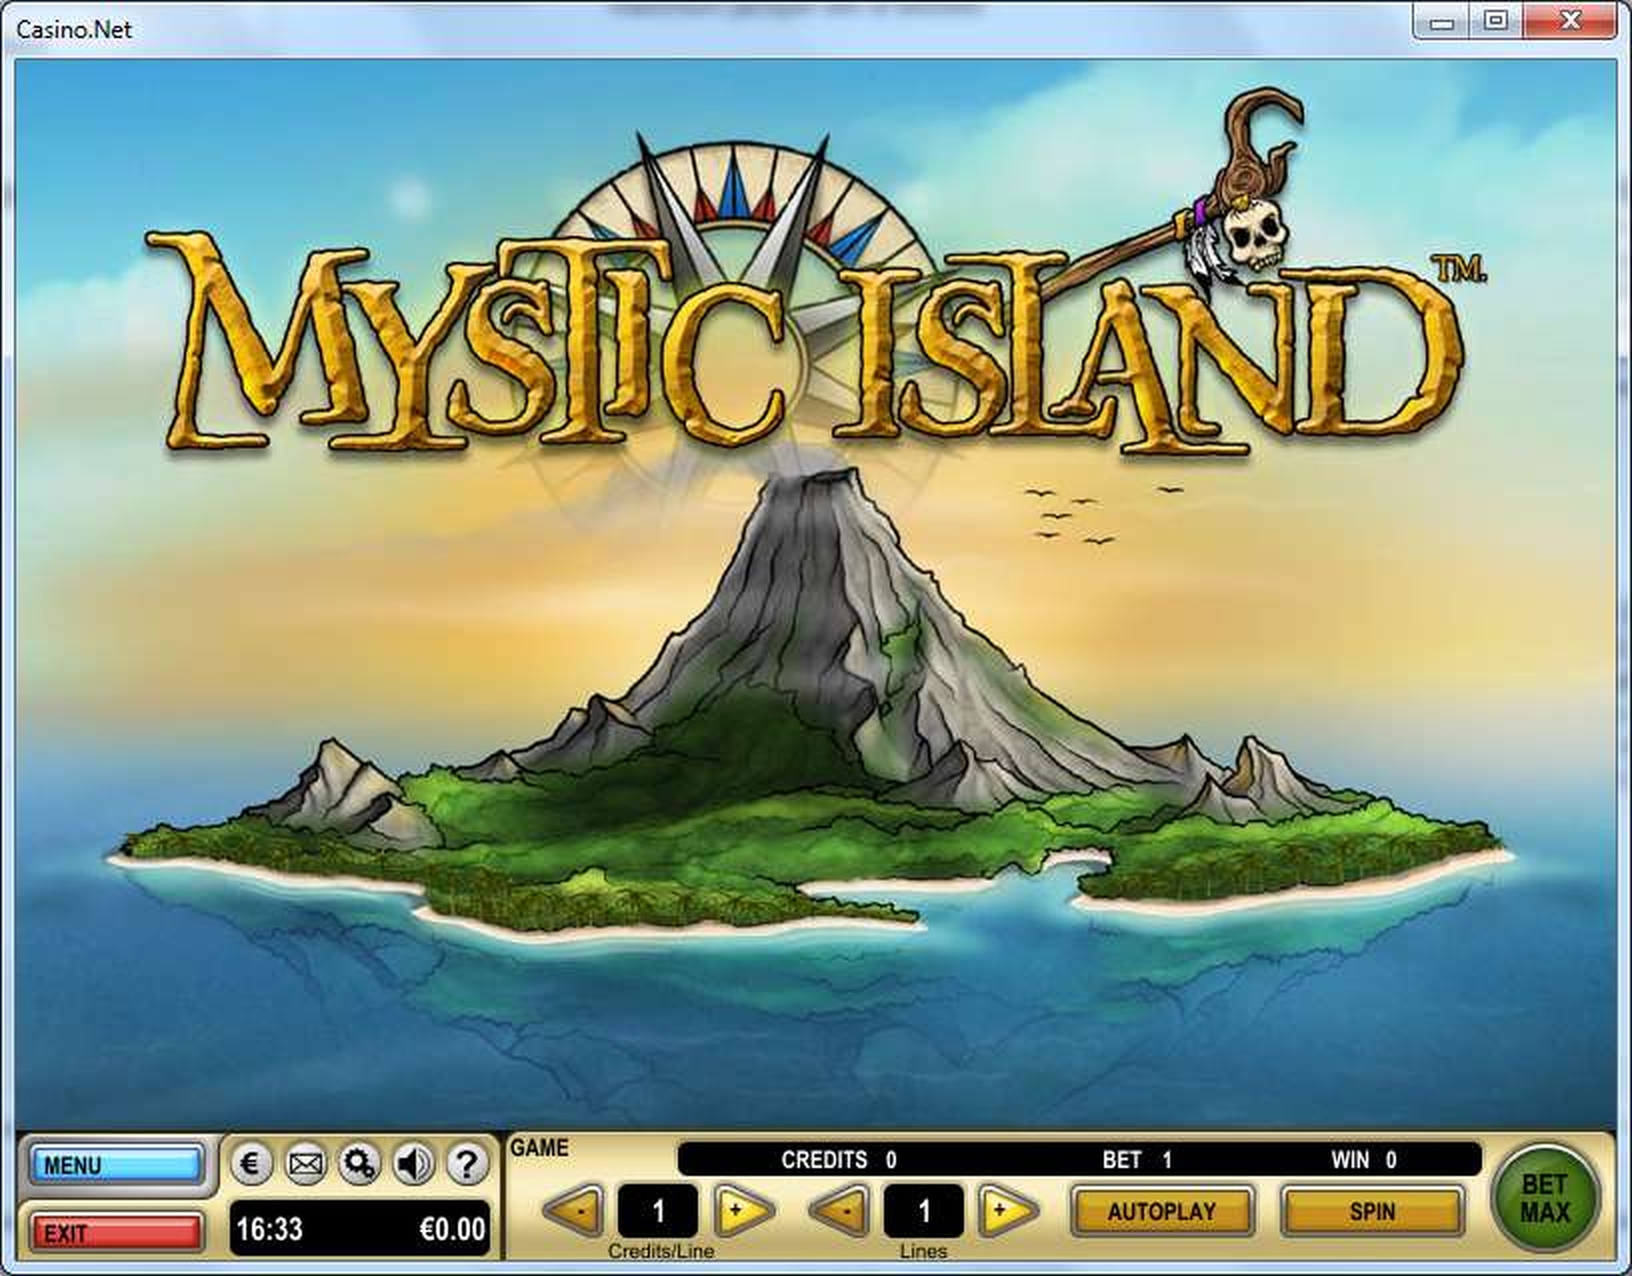 Mystic Island demo